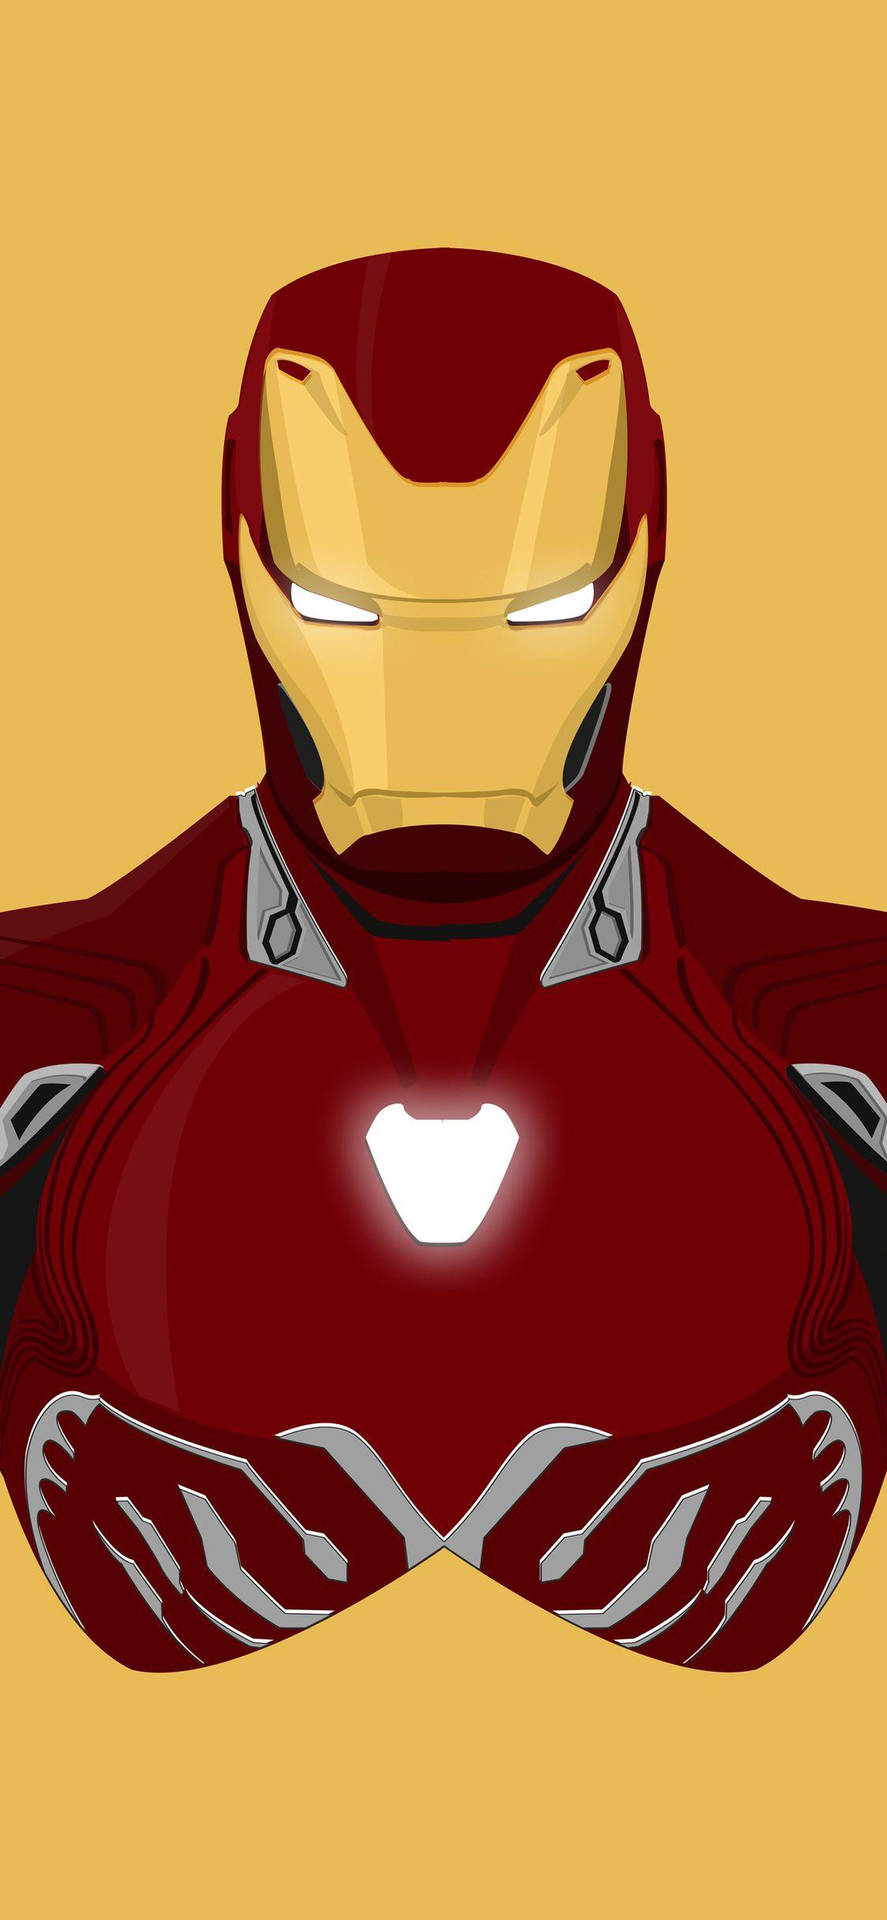 Aesthetic Iron Man Iphone Wallpaper